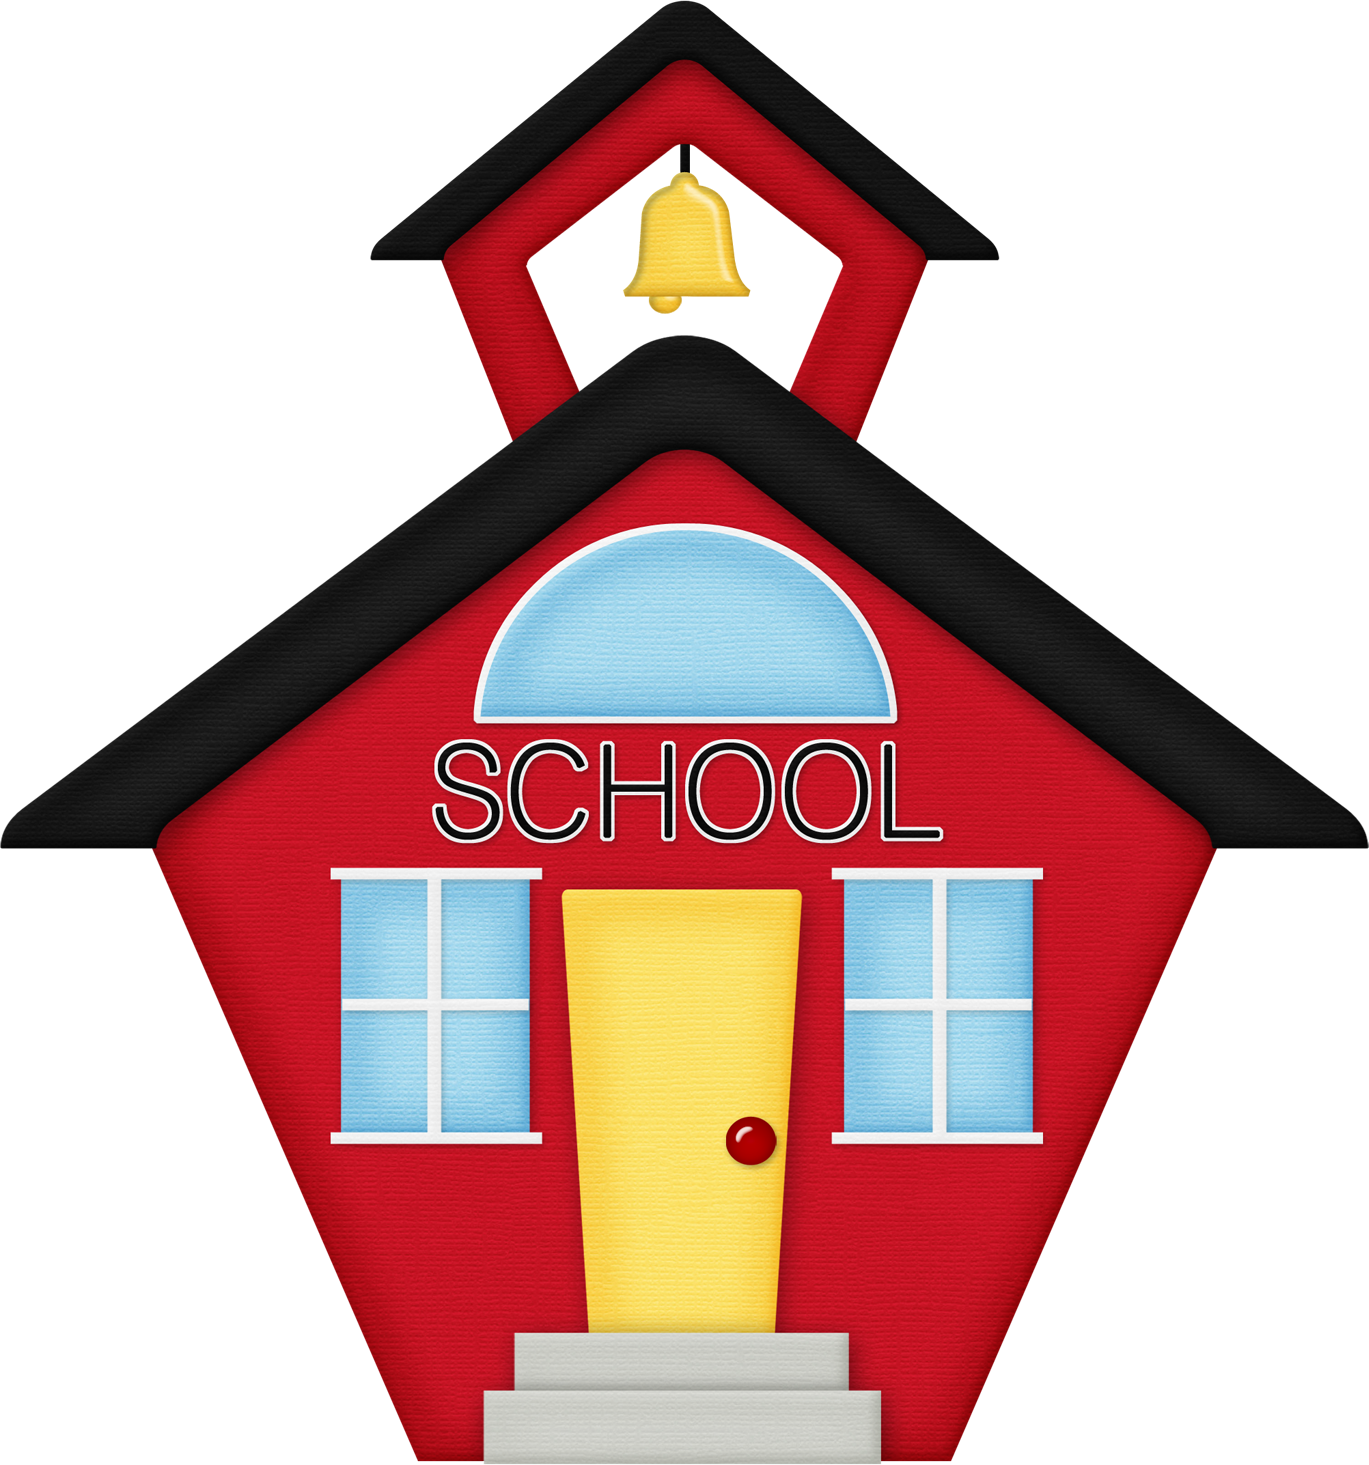 School house schoolhouse silhouette clipart